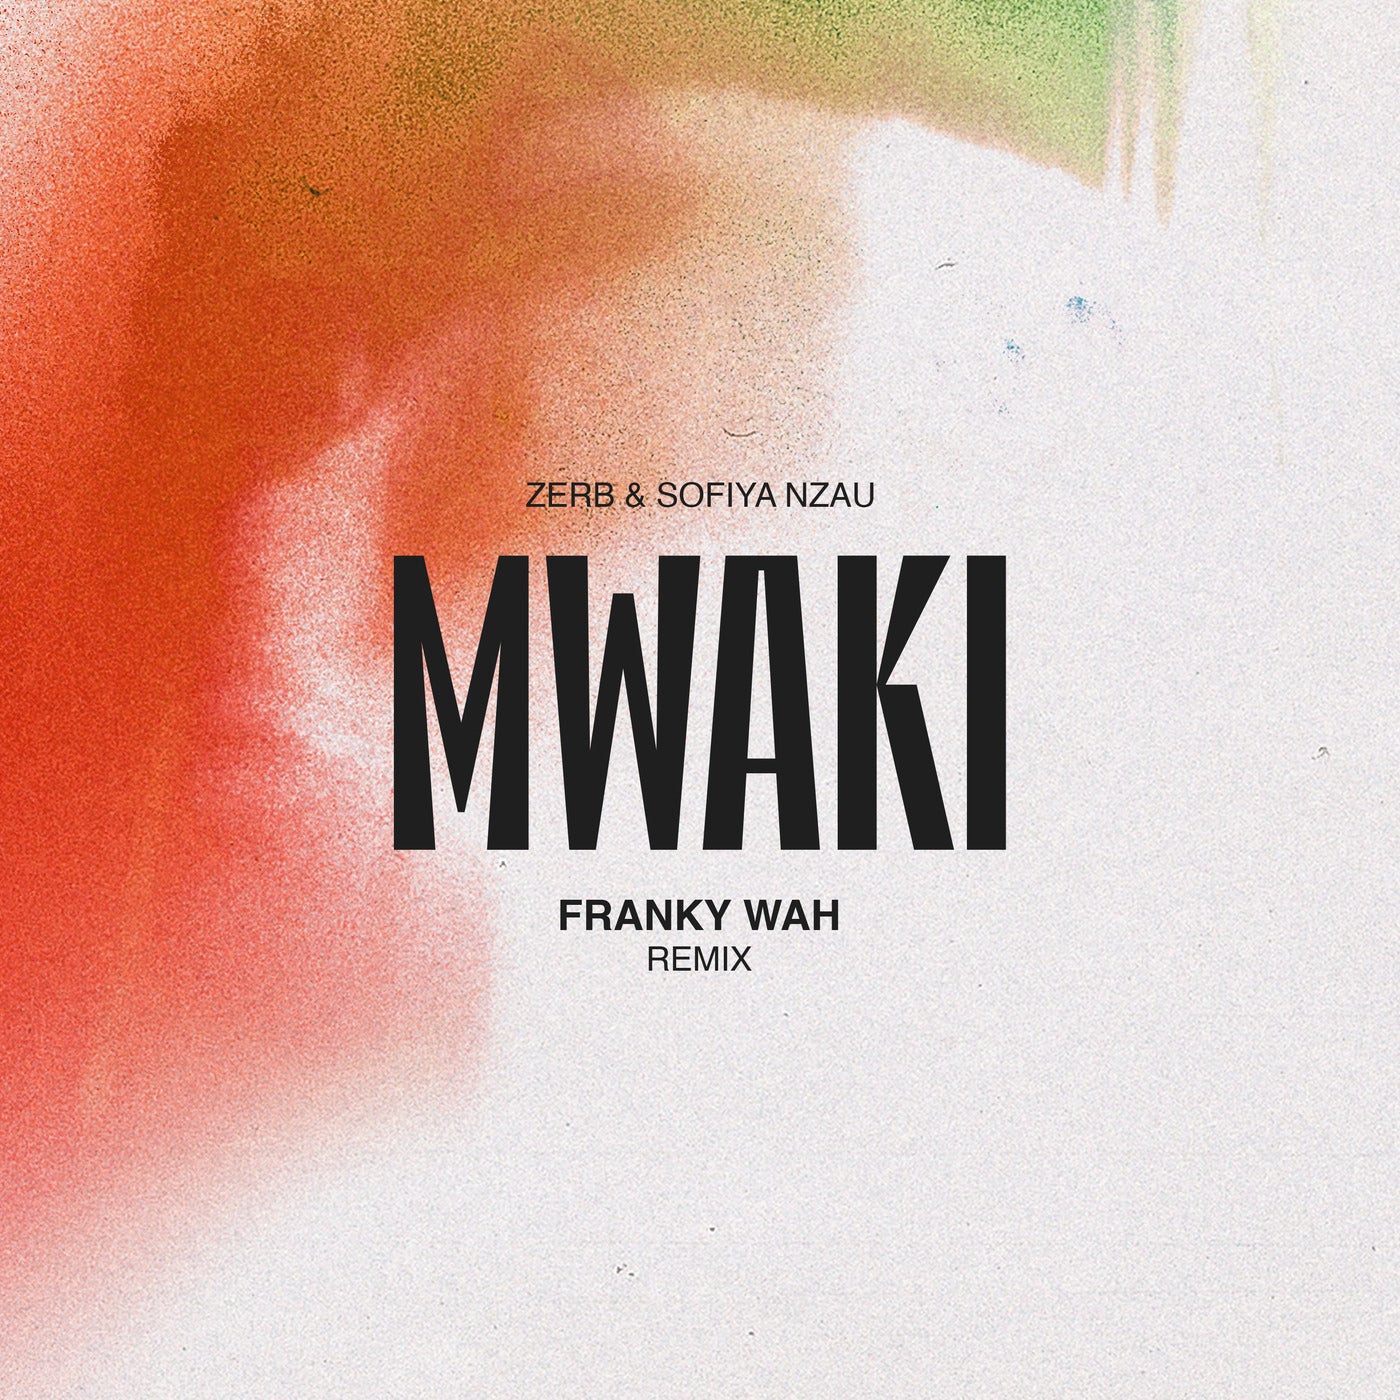 Mwaki - Franky Wah Remix Extended